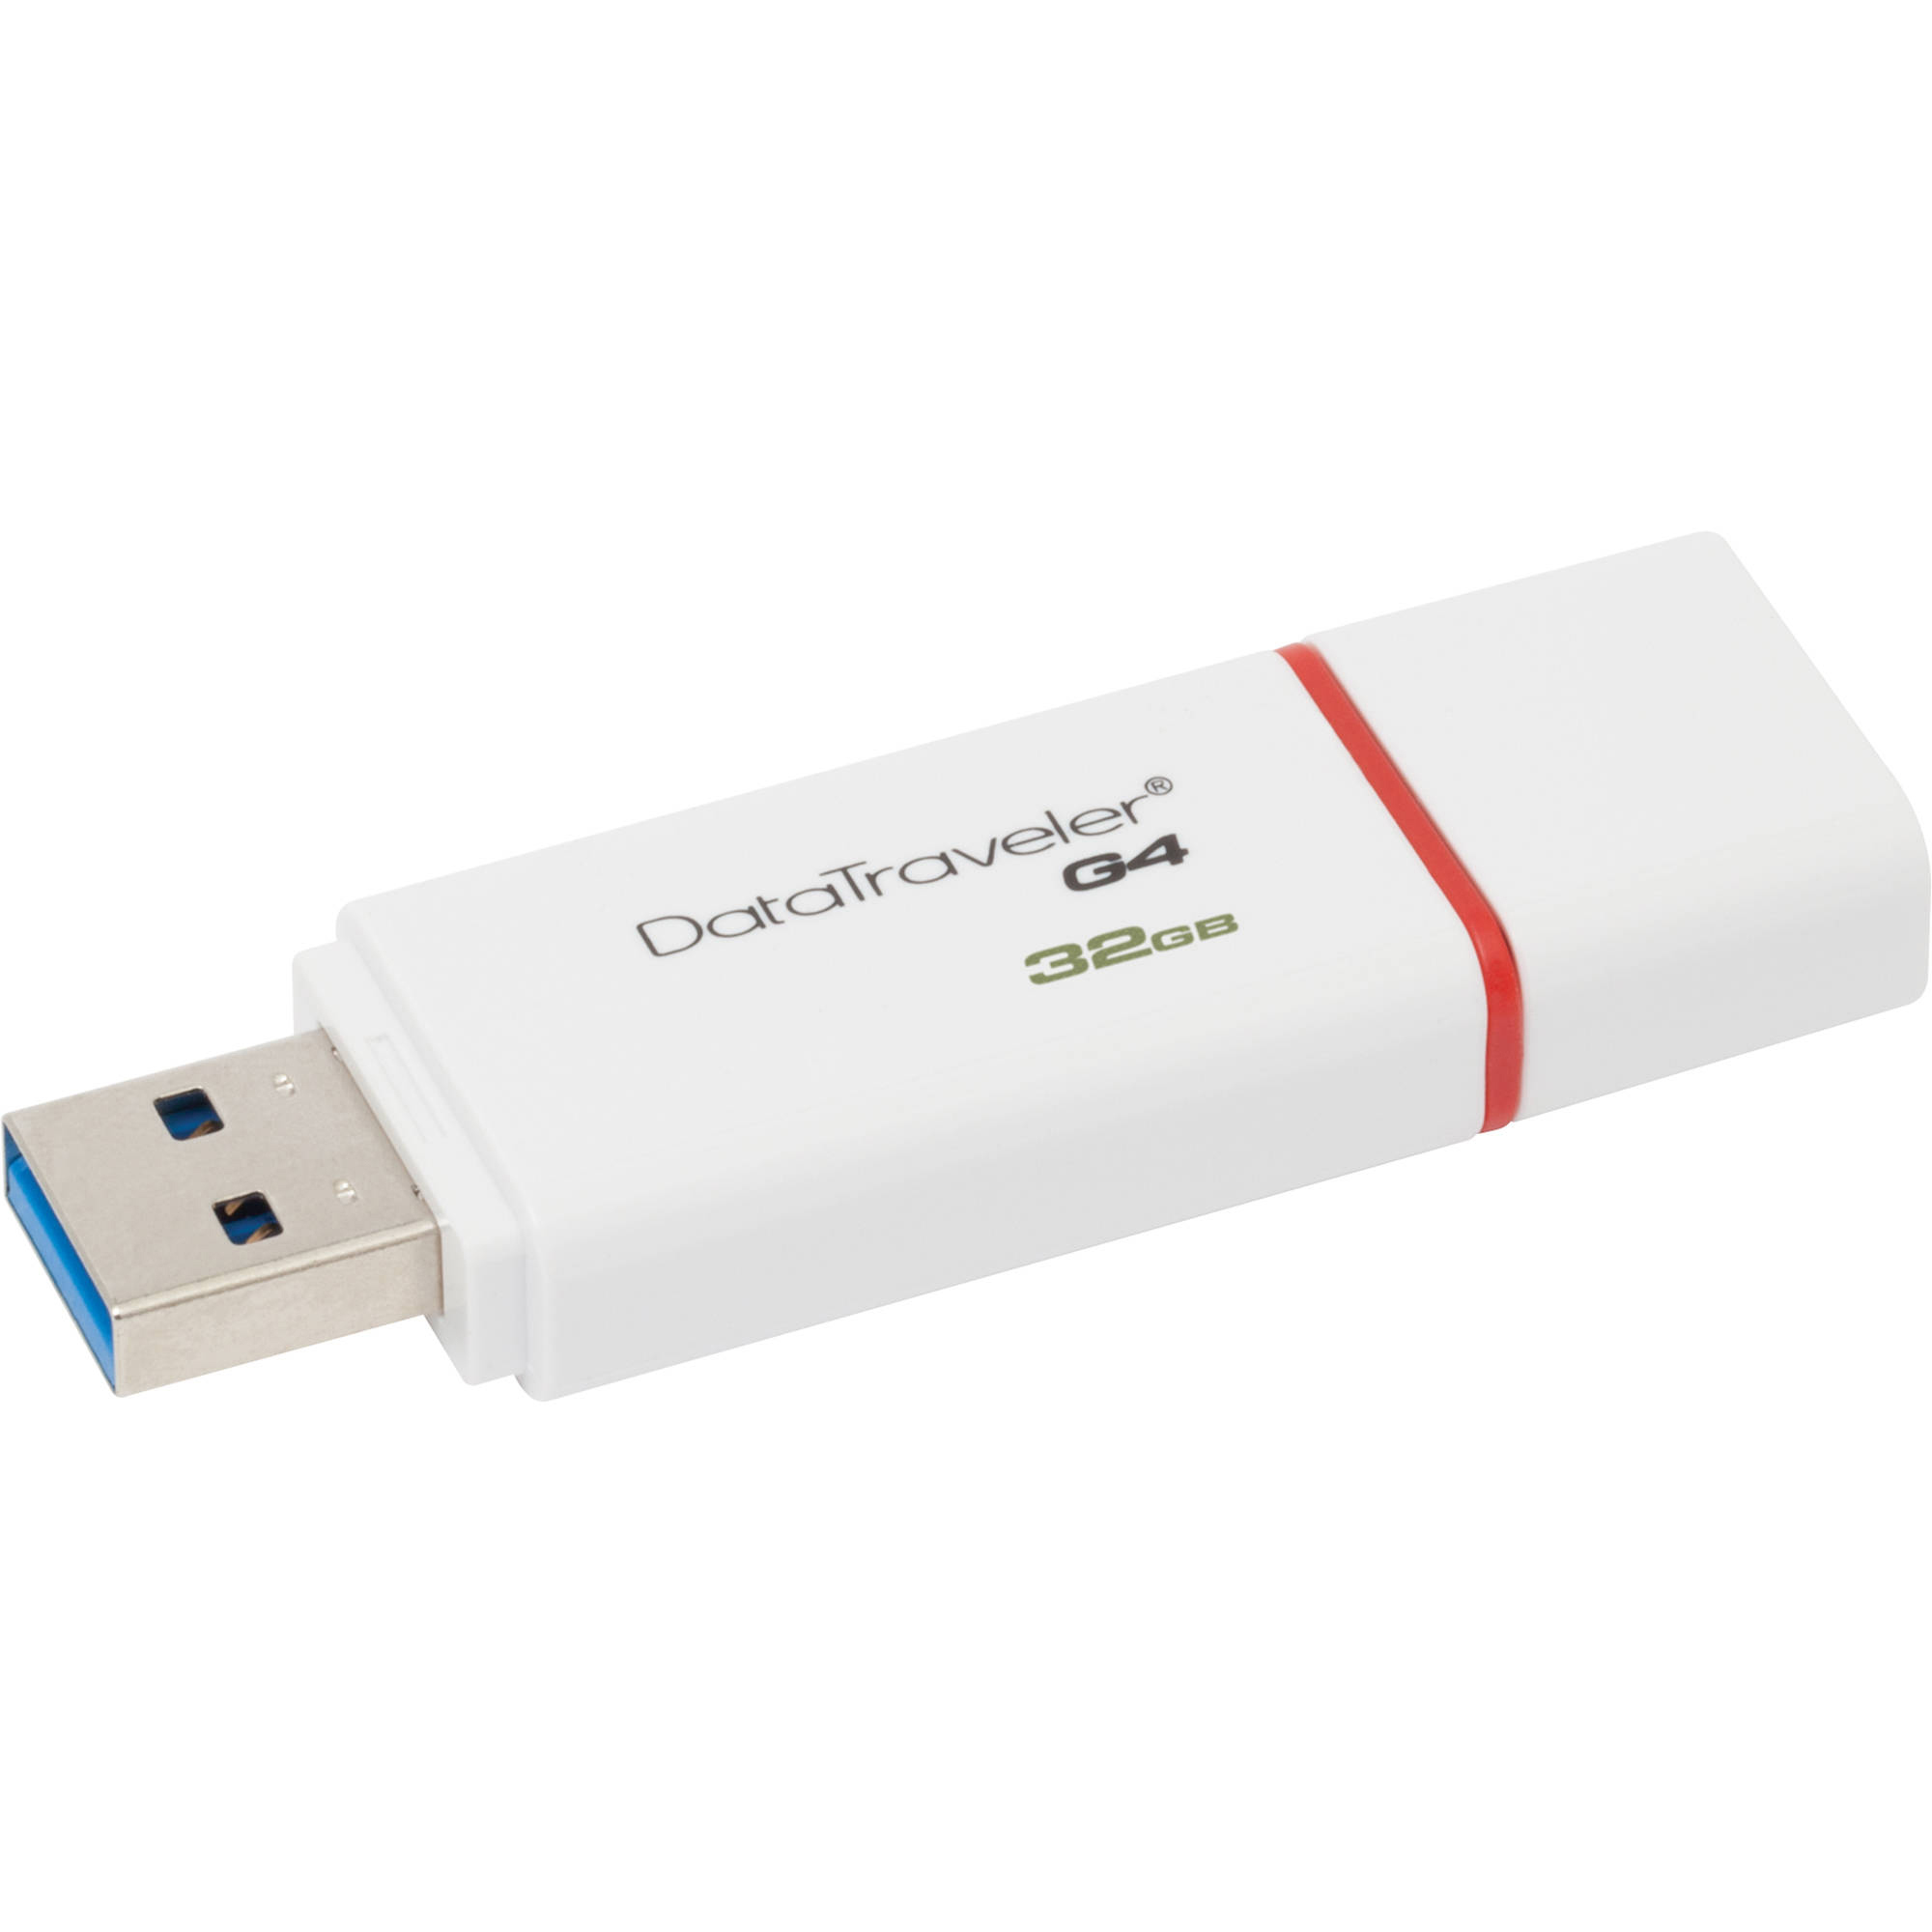 Original Kingston Data Traveler G4 32GB Red/White USB 3.0 Flash Drive (DTIG4/32GB)